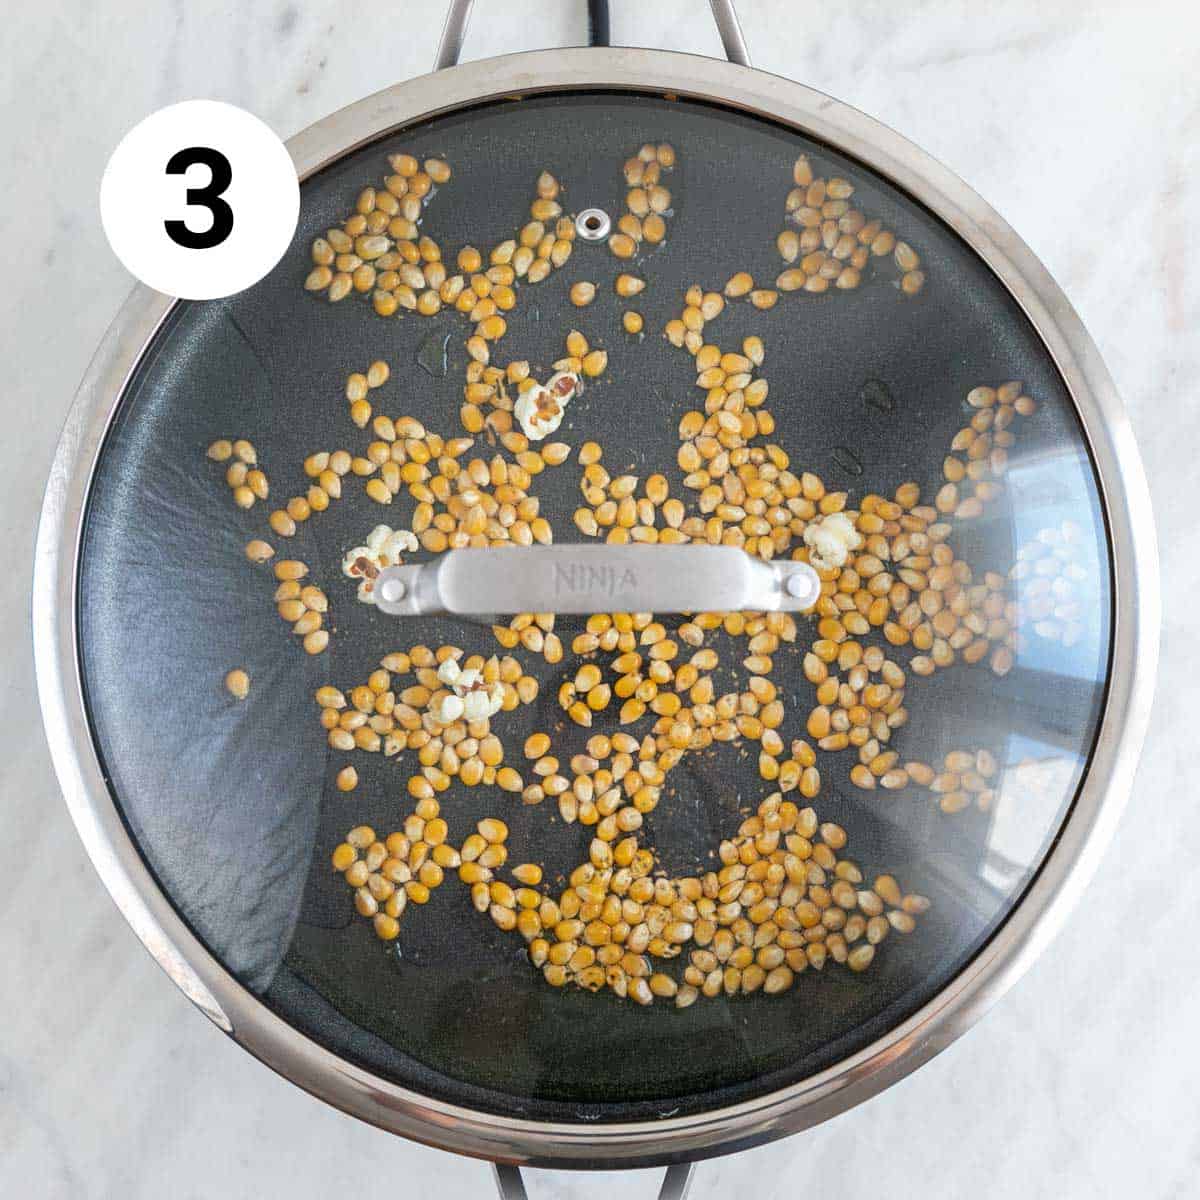 Popcorn kernels in a skillet with oil.